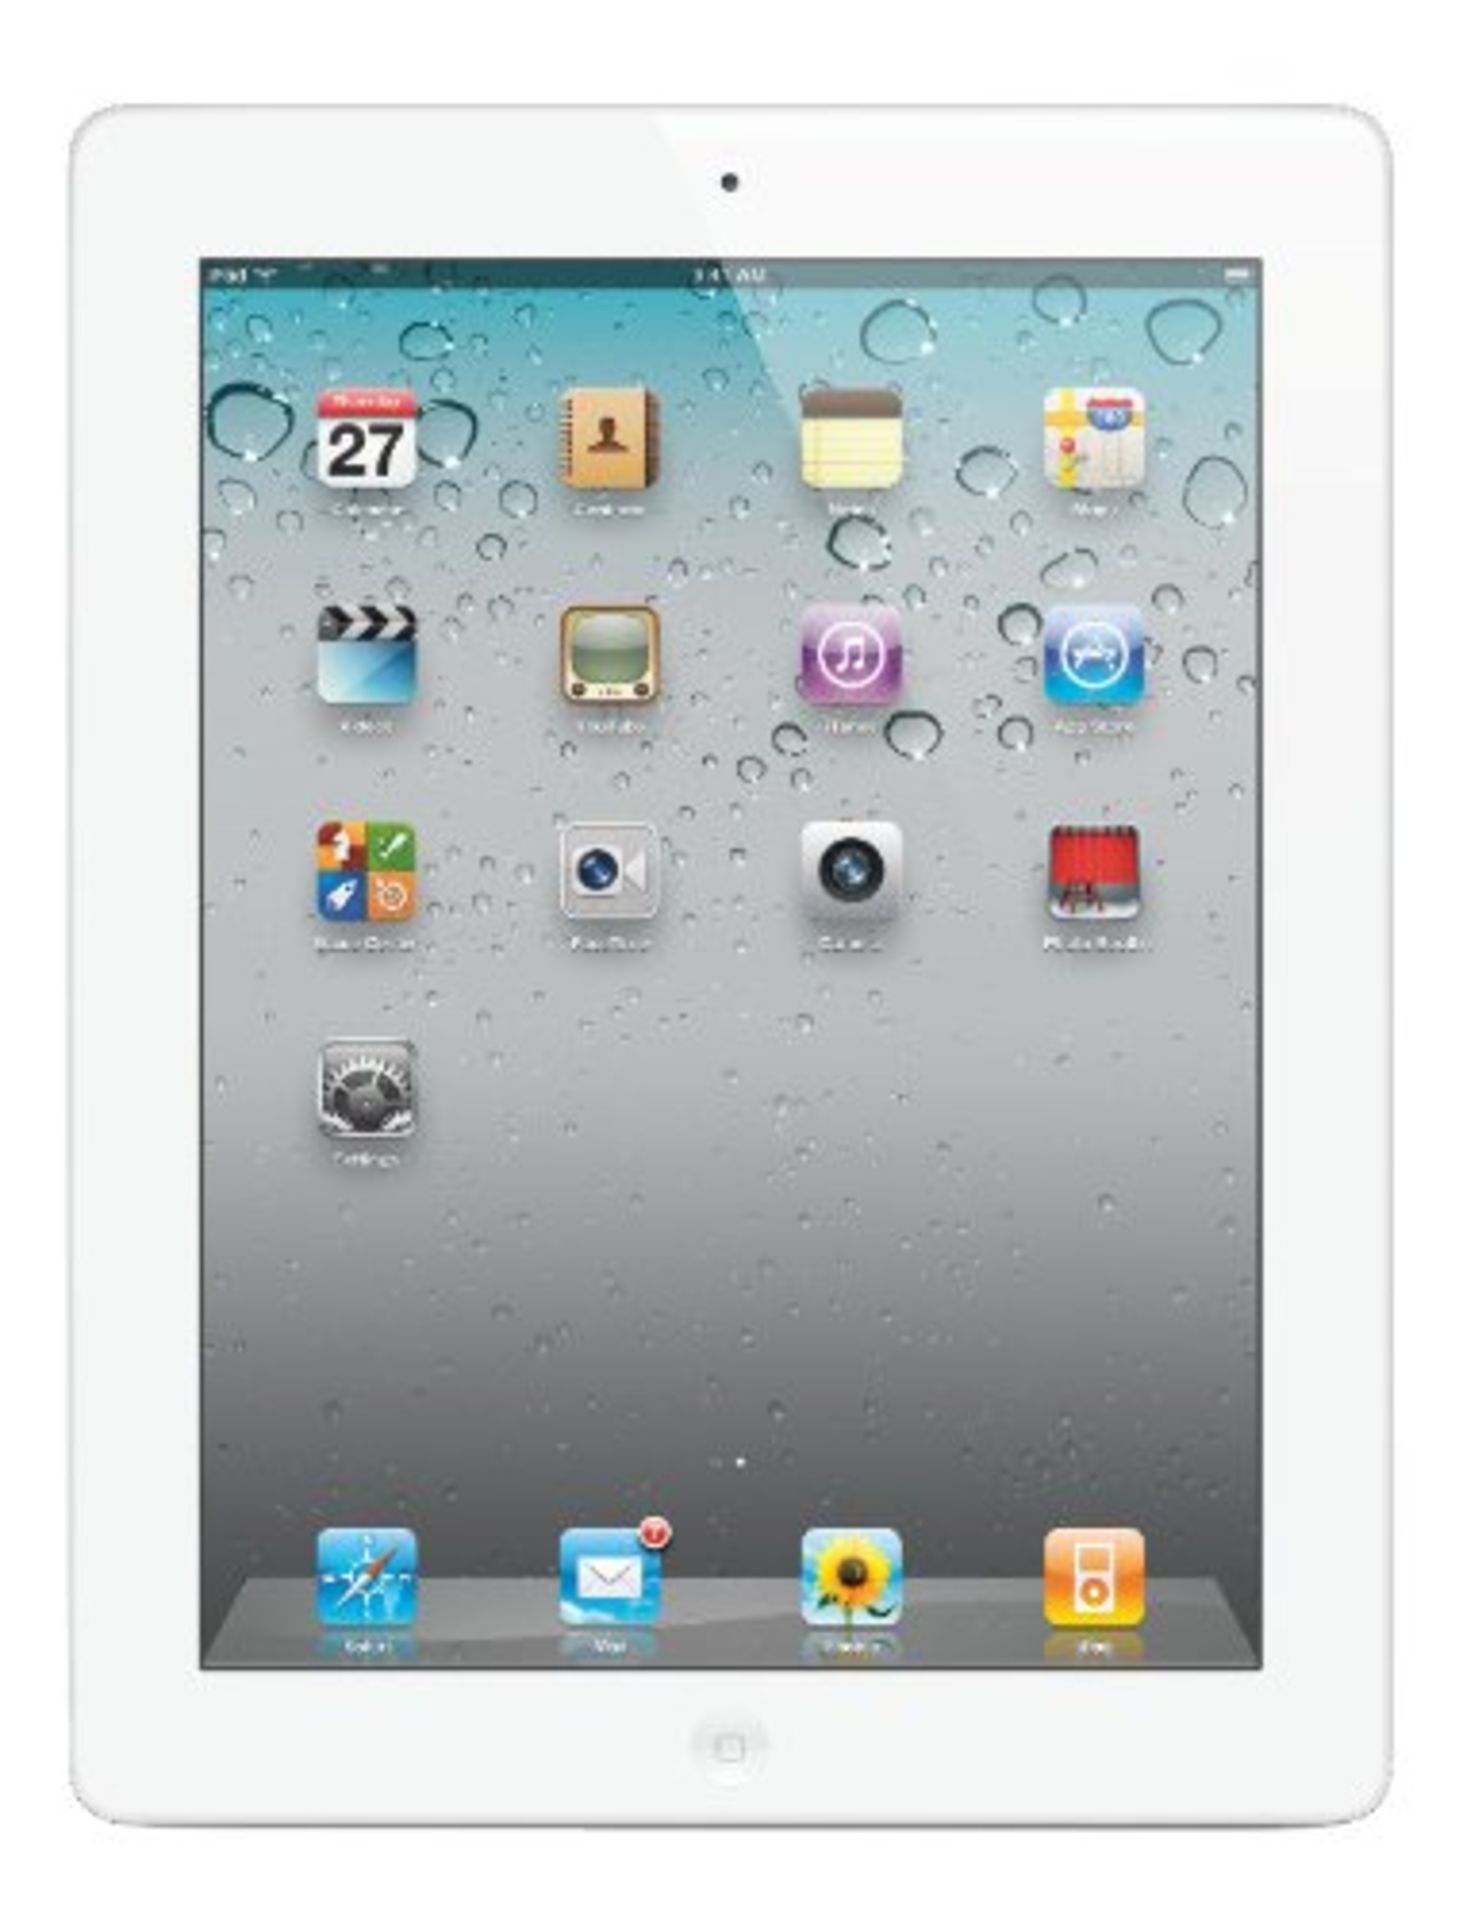 V Grade C Apple iPad 2 16GB - Black - Wi-Fi - Unit Only